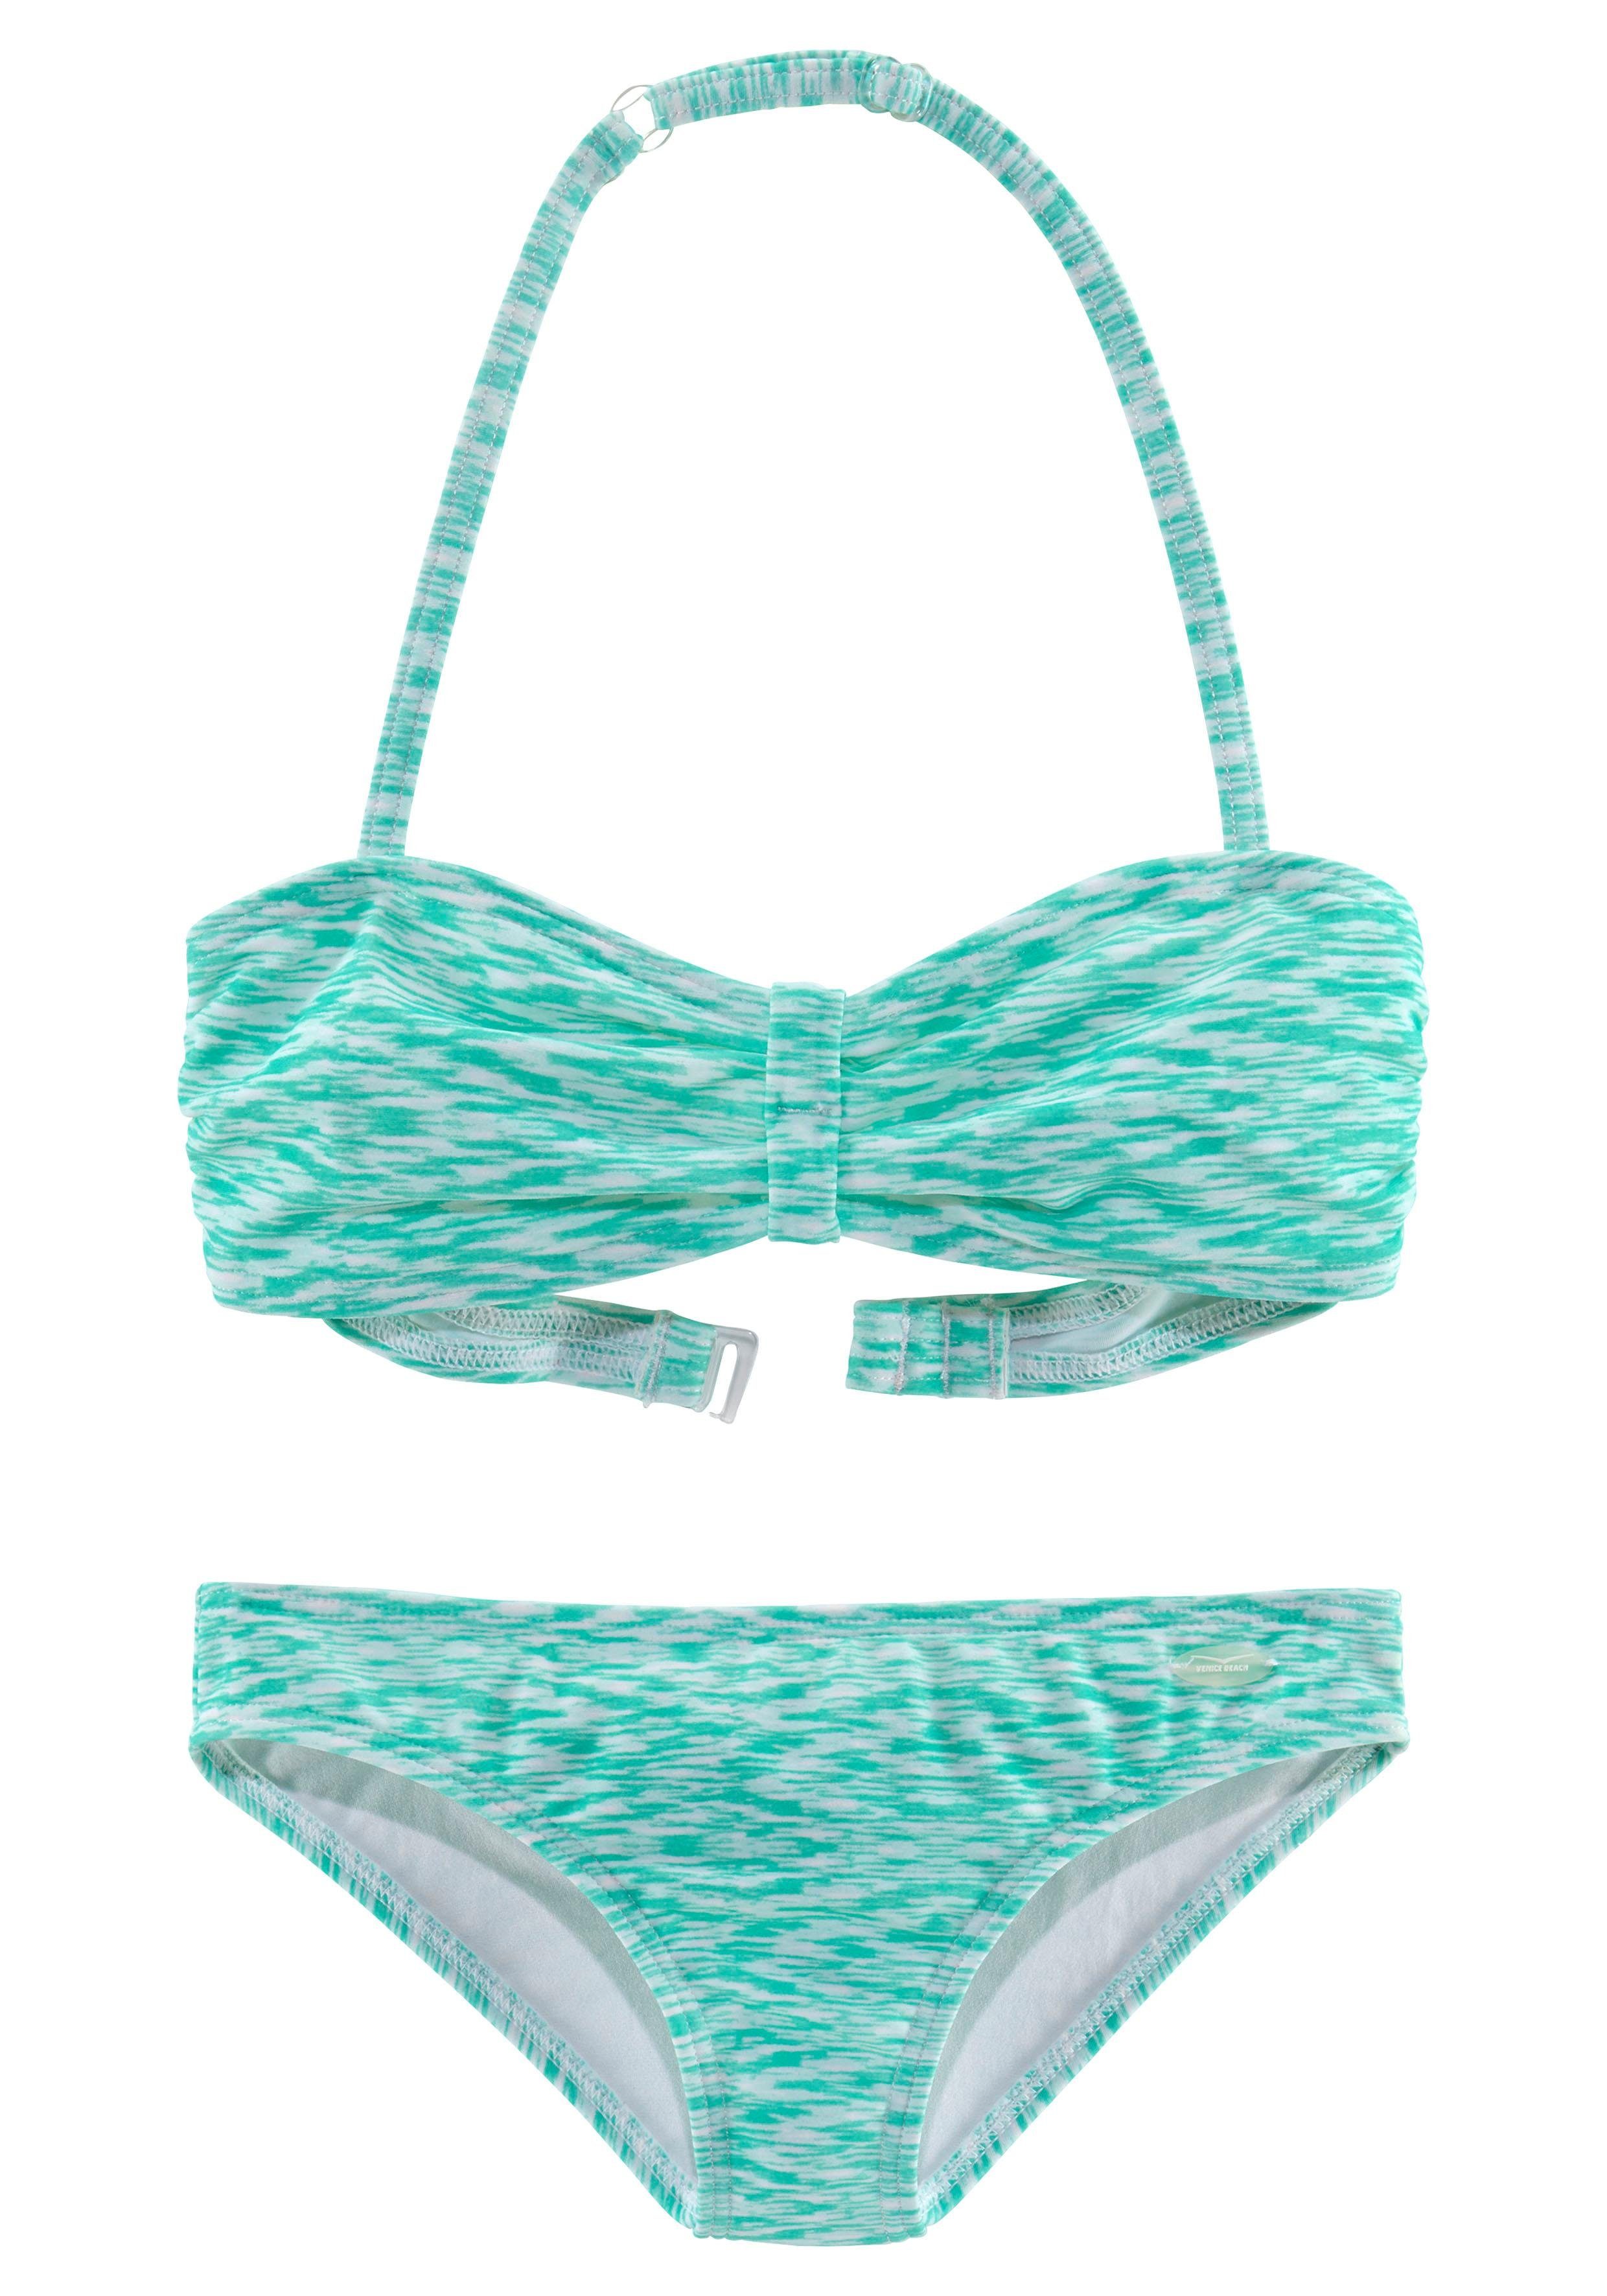 Bandeau-Bikini Melange-Optik mint-weiß Venice Beach in